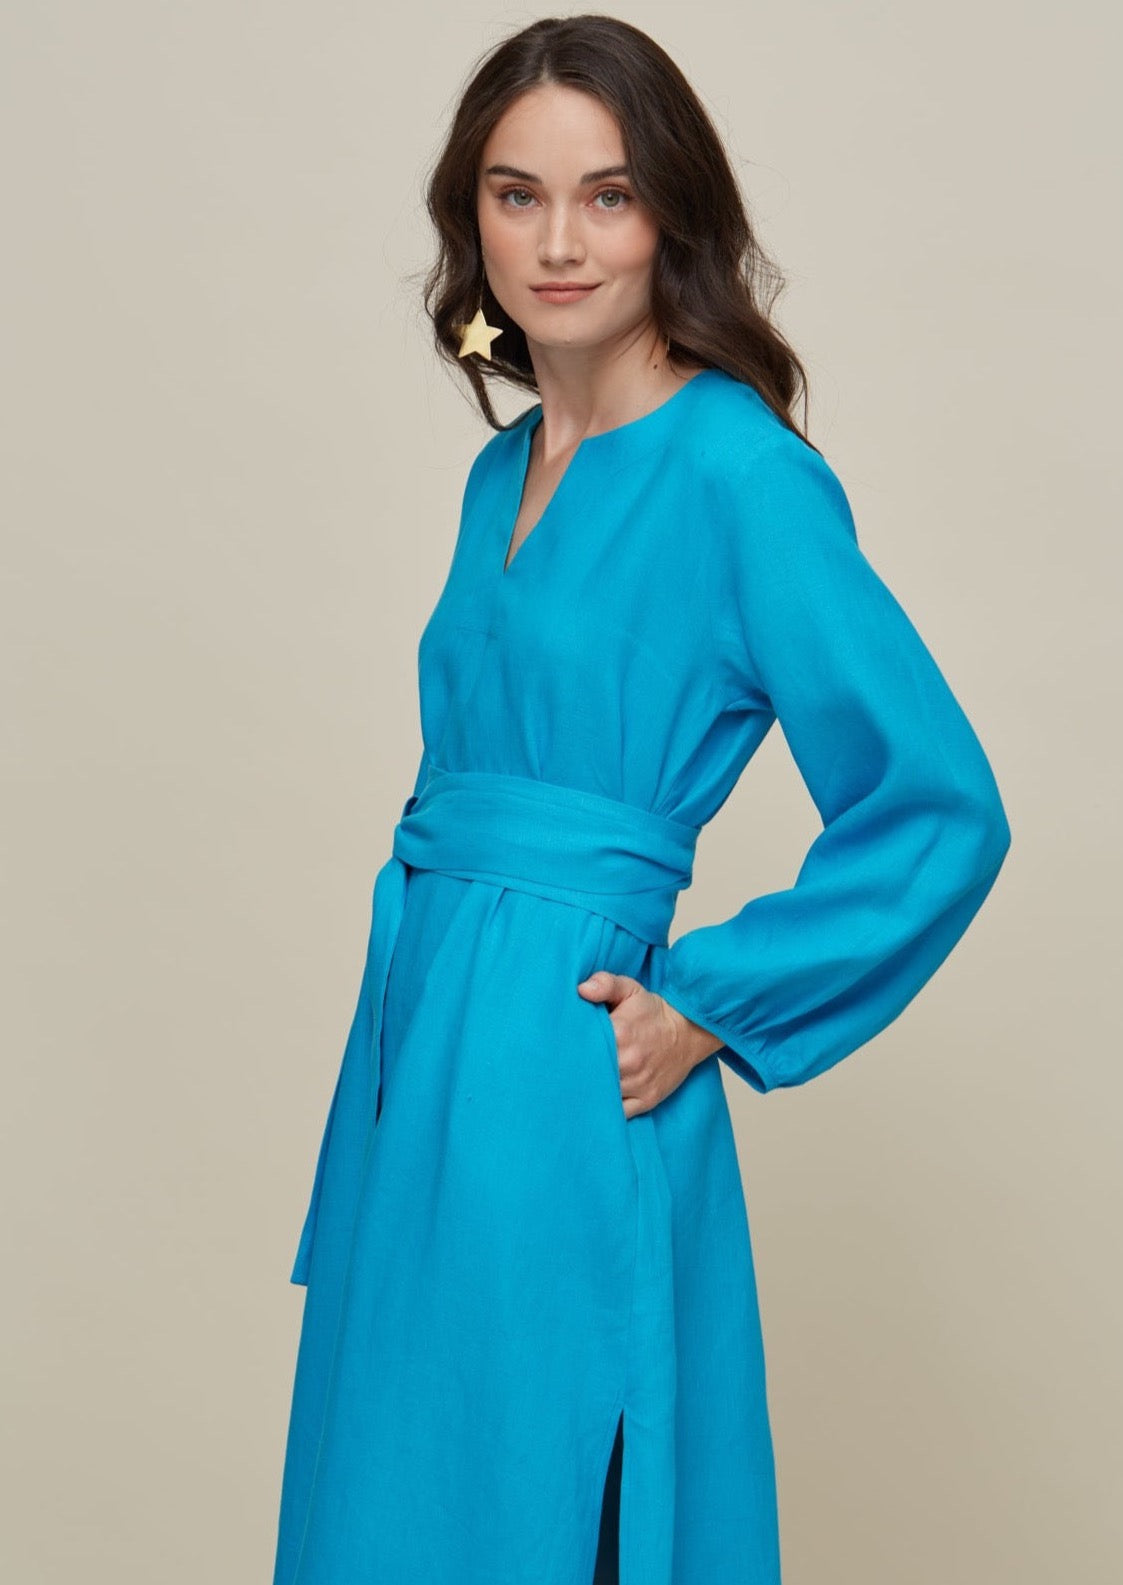 Galeria-Bristol Turquoise Dress-Justbrazil